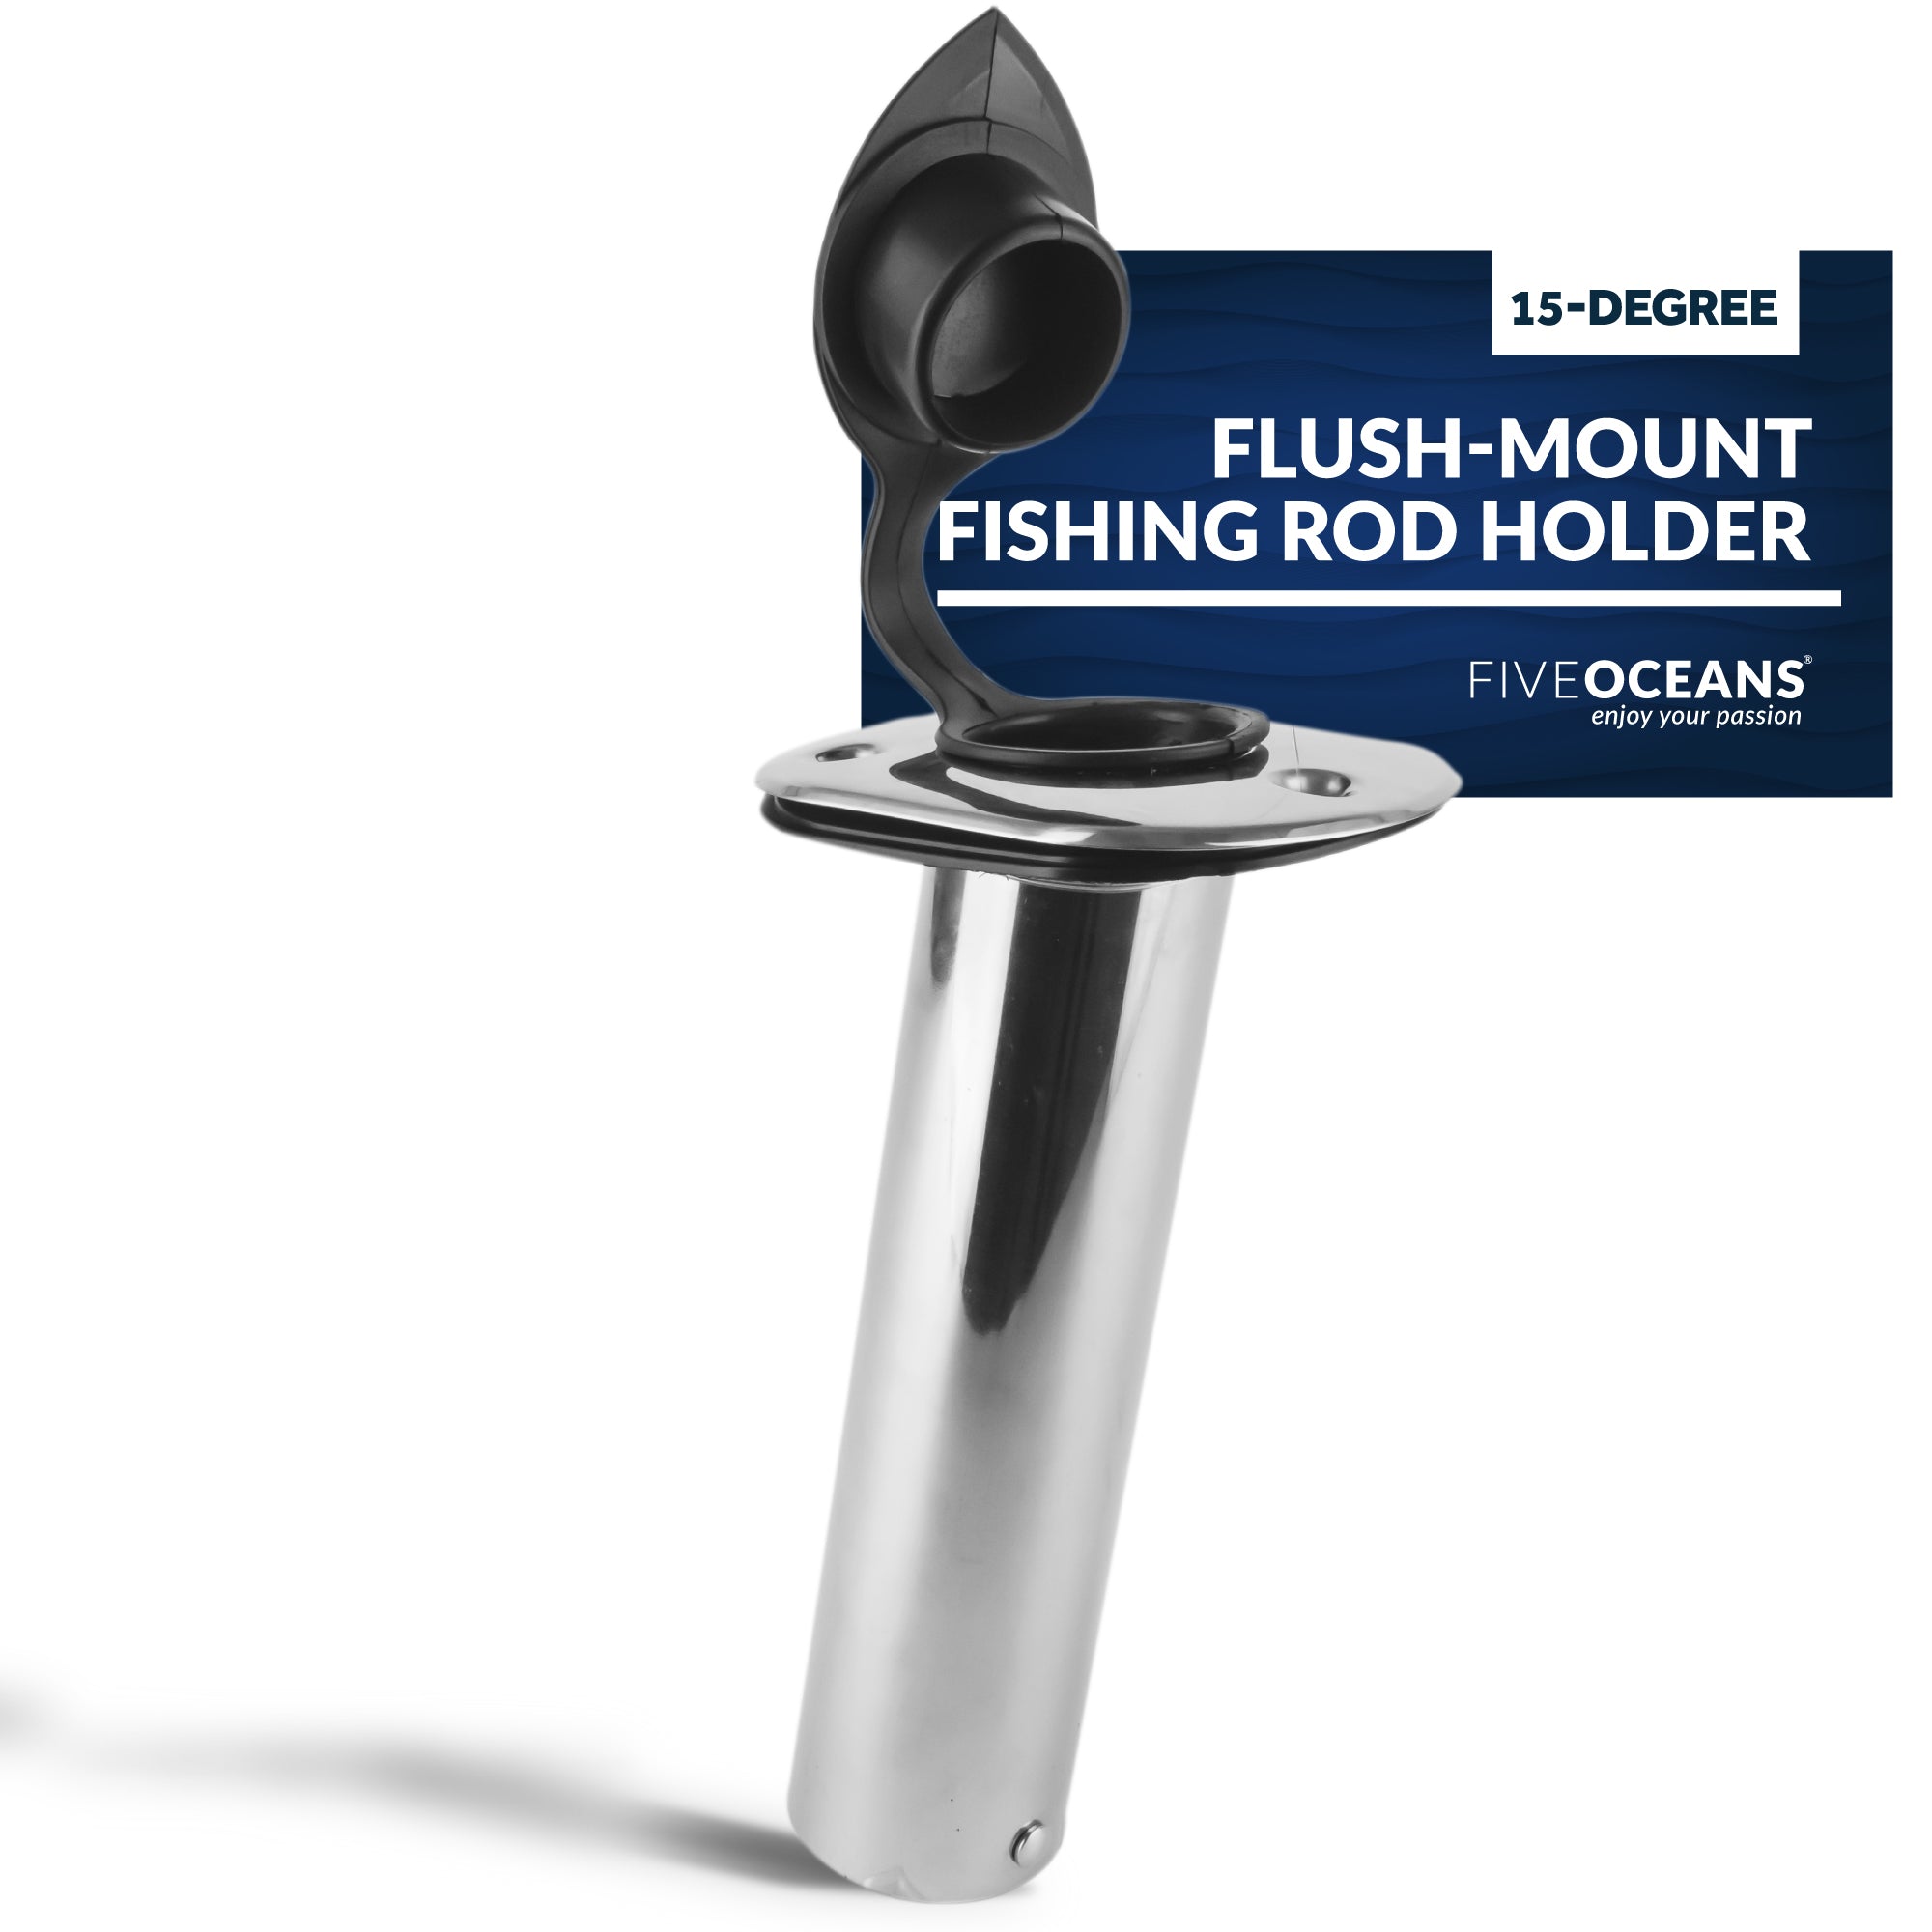 Stainless Steel Flush-Mount Fishing Rod Holder, 15-Degree Top Flange, PVC Tube Inside with Flip-up Cap, PVC Gasket, Open Base, 1-Pack, FO-4496